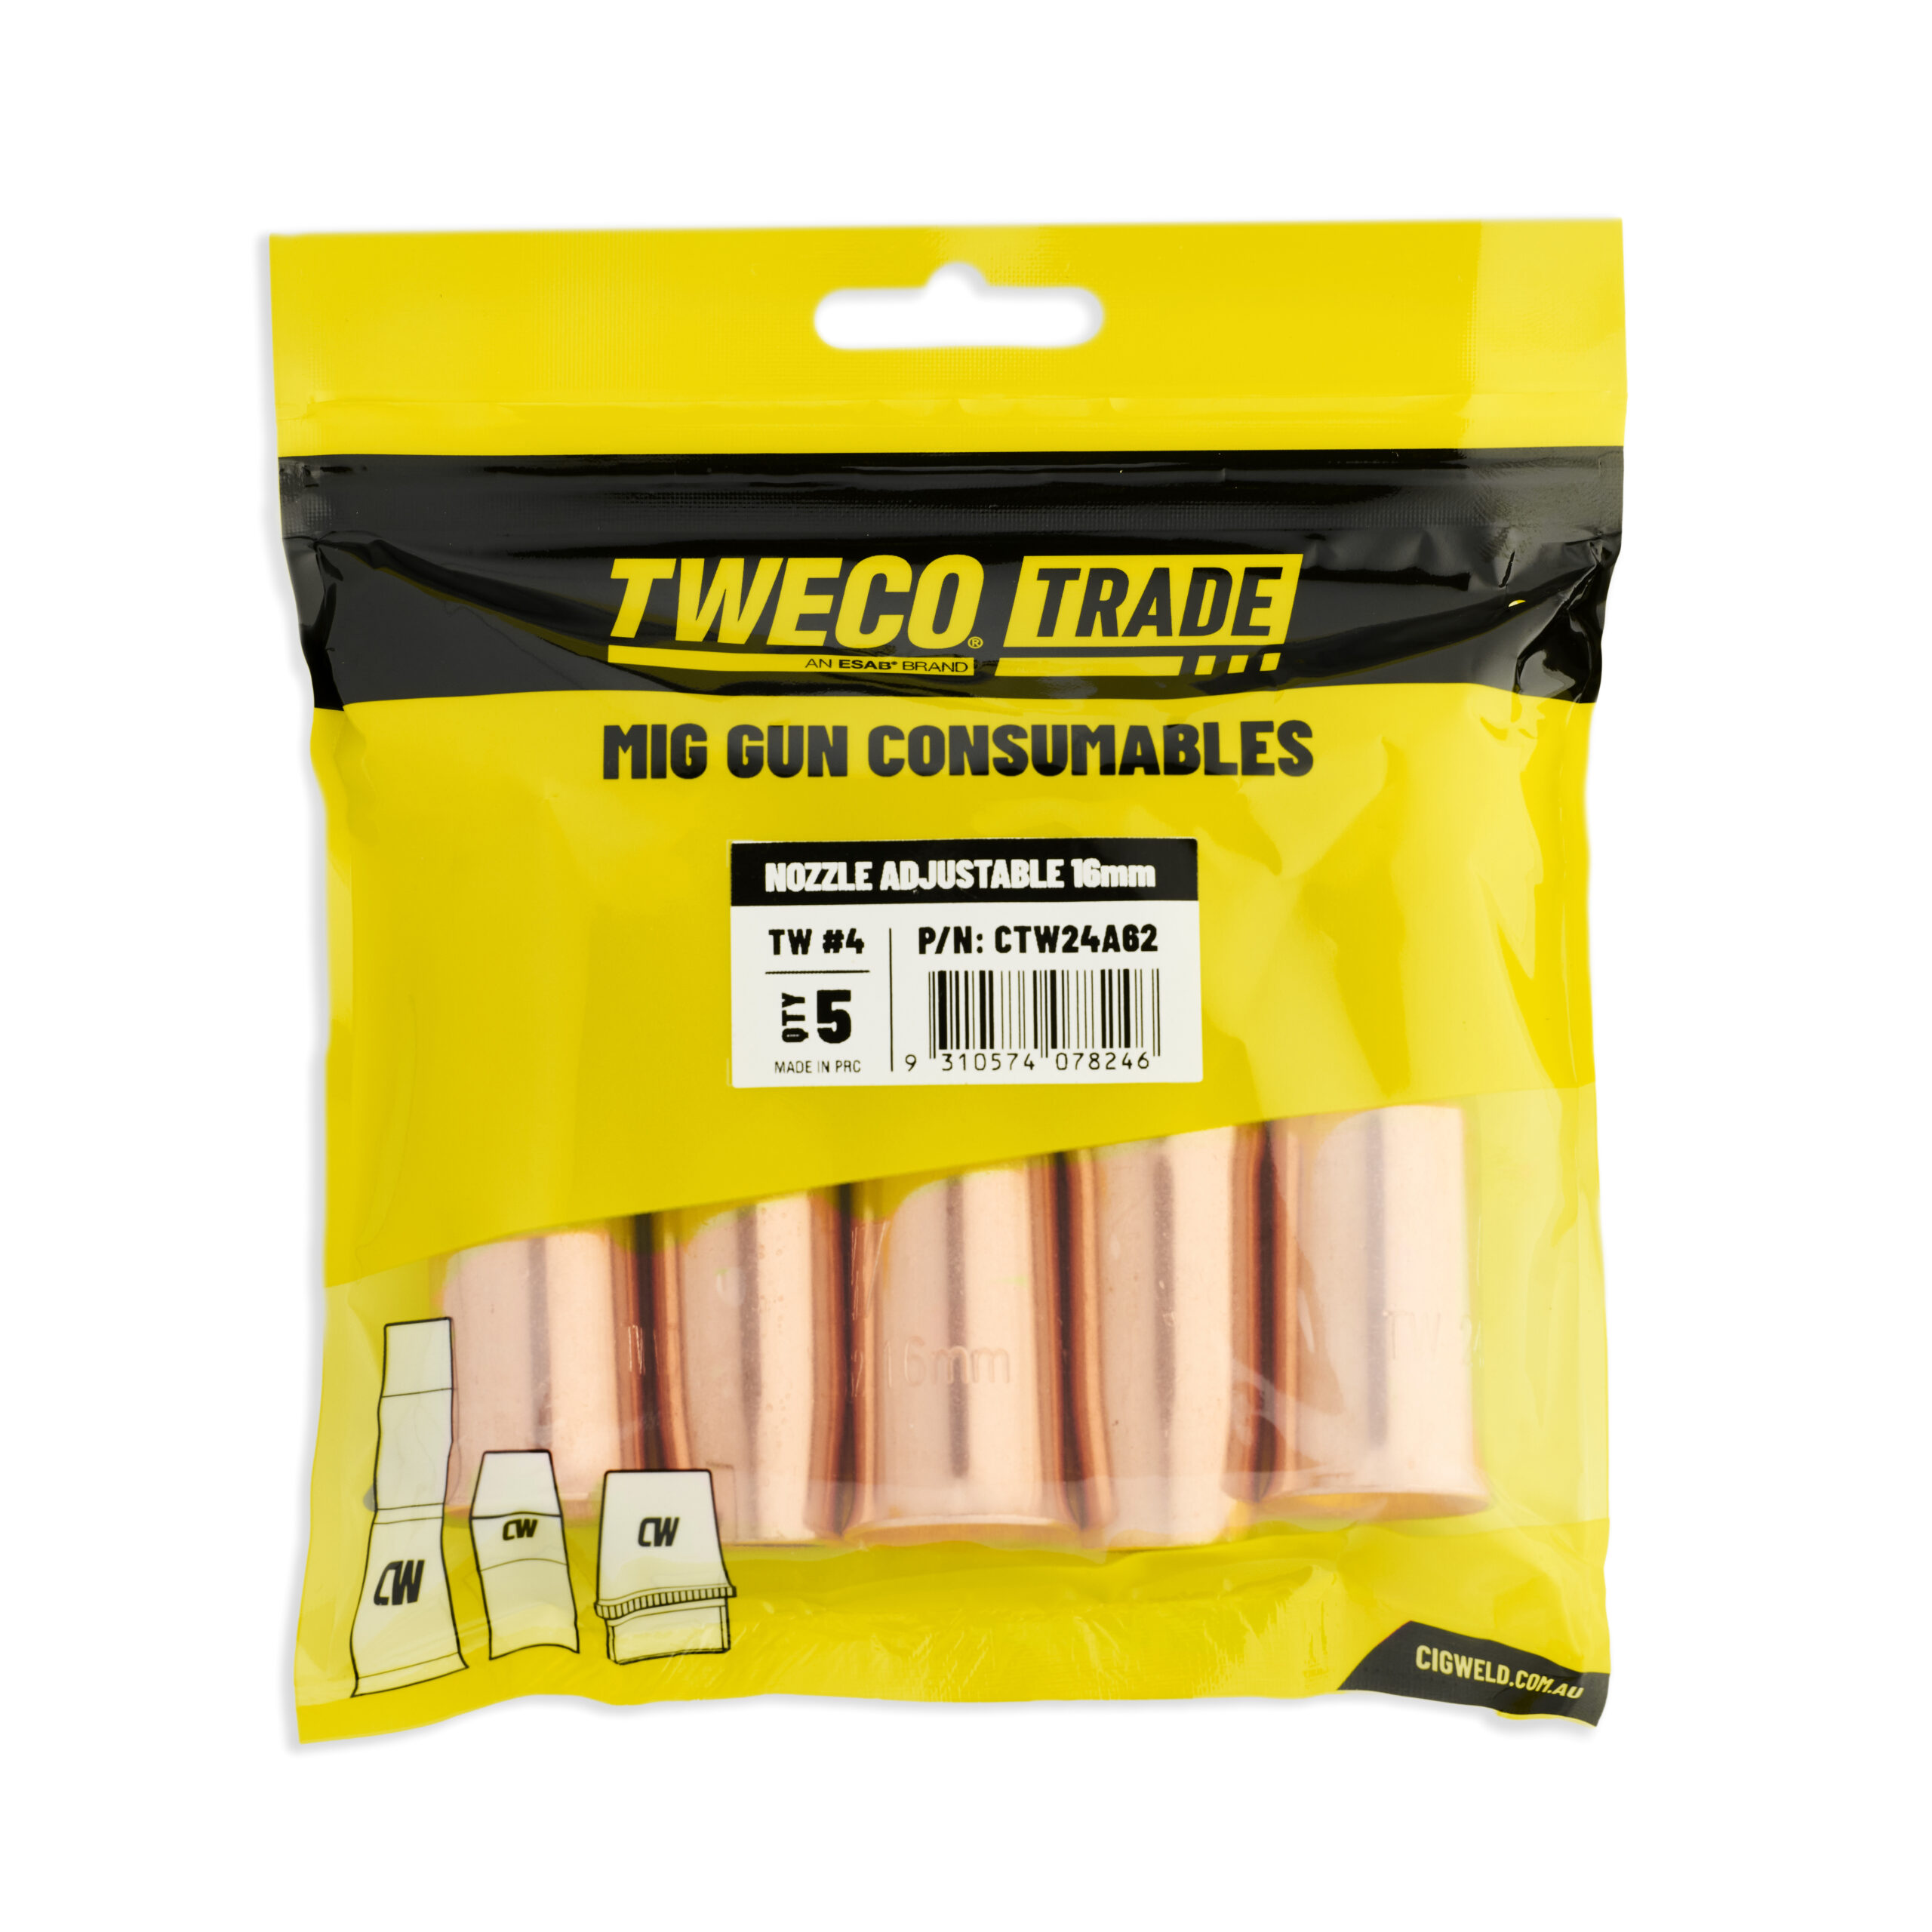 Tweco Trade 4 Adj Nozzle 16mm 5pk